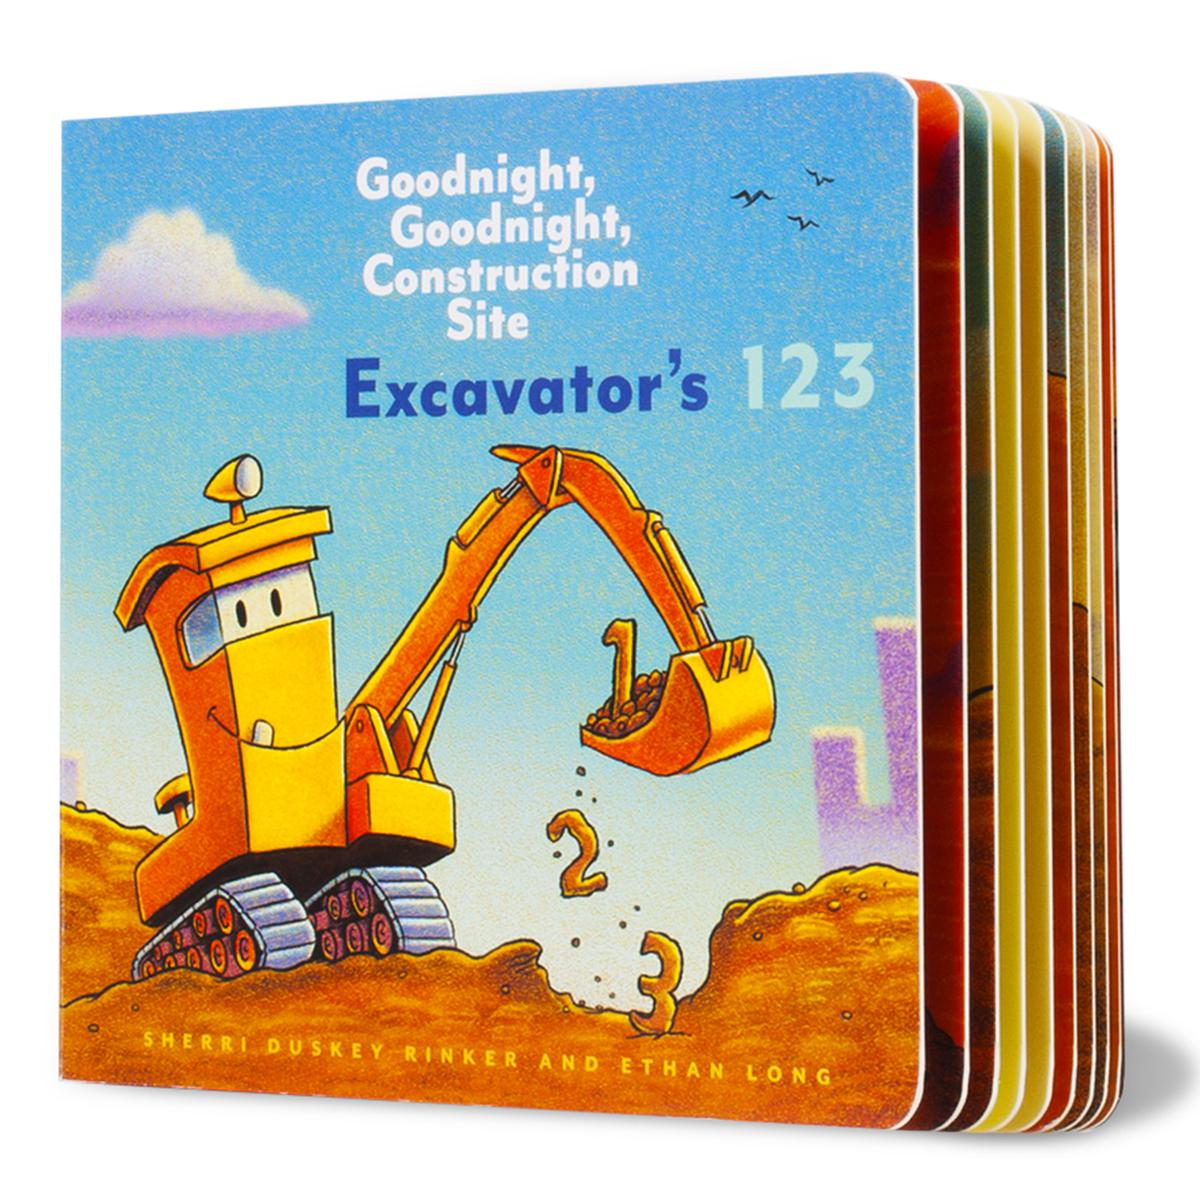  Goodnight, Goodnight, Construction Site: Excavator's 123 